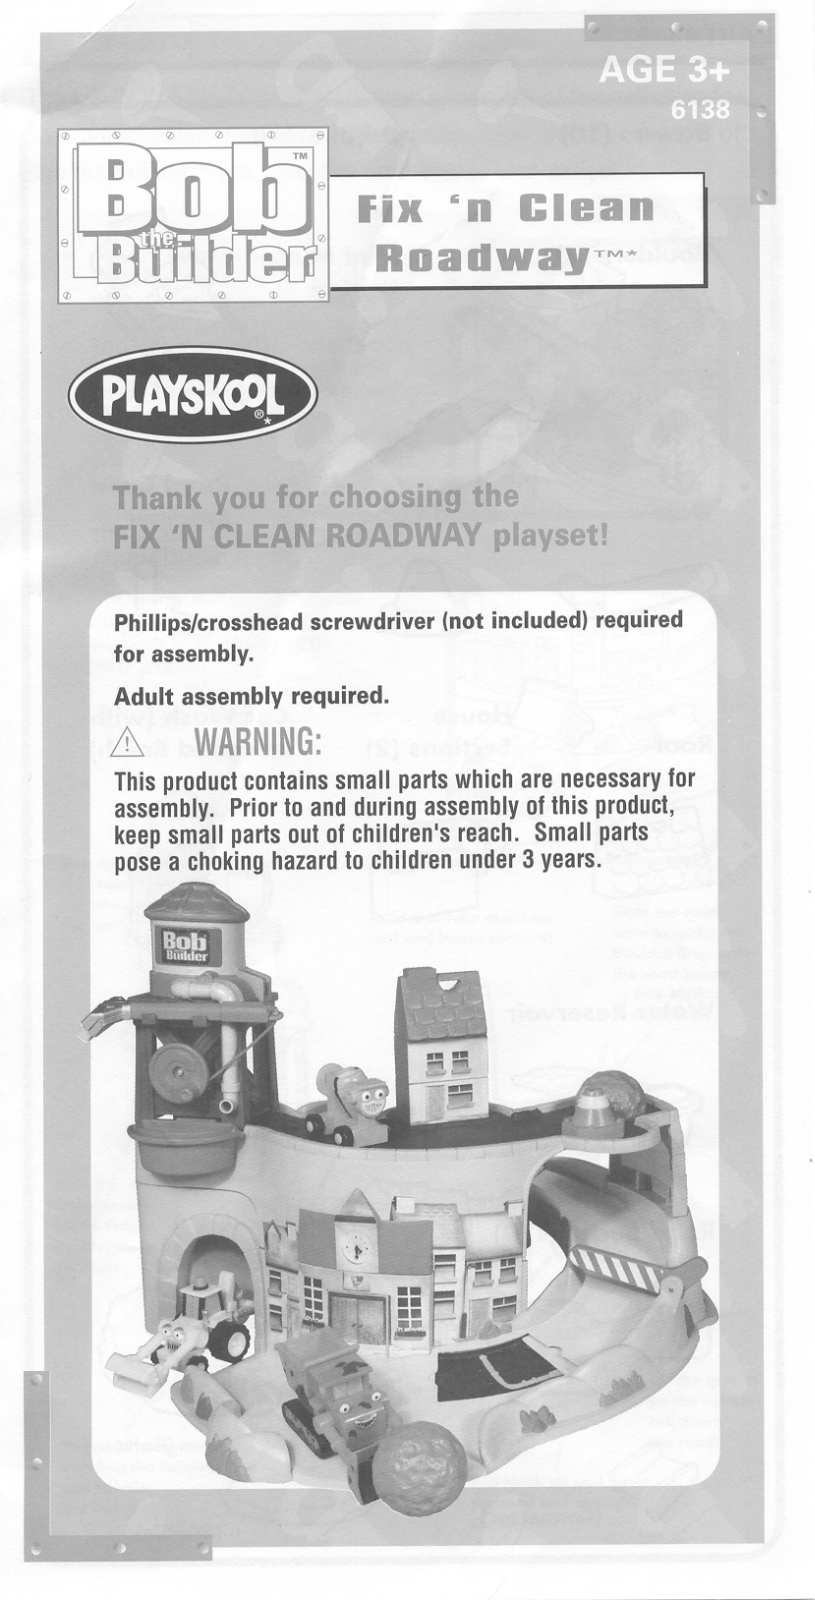 HASBRO Bob the Builder Fix 'n Clean Roadway User Manual